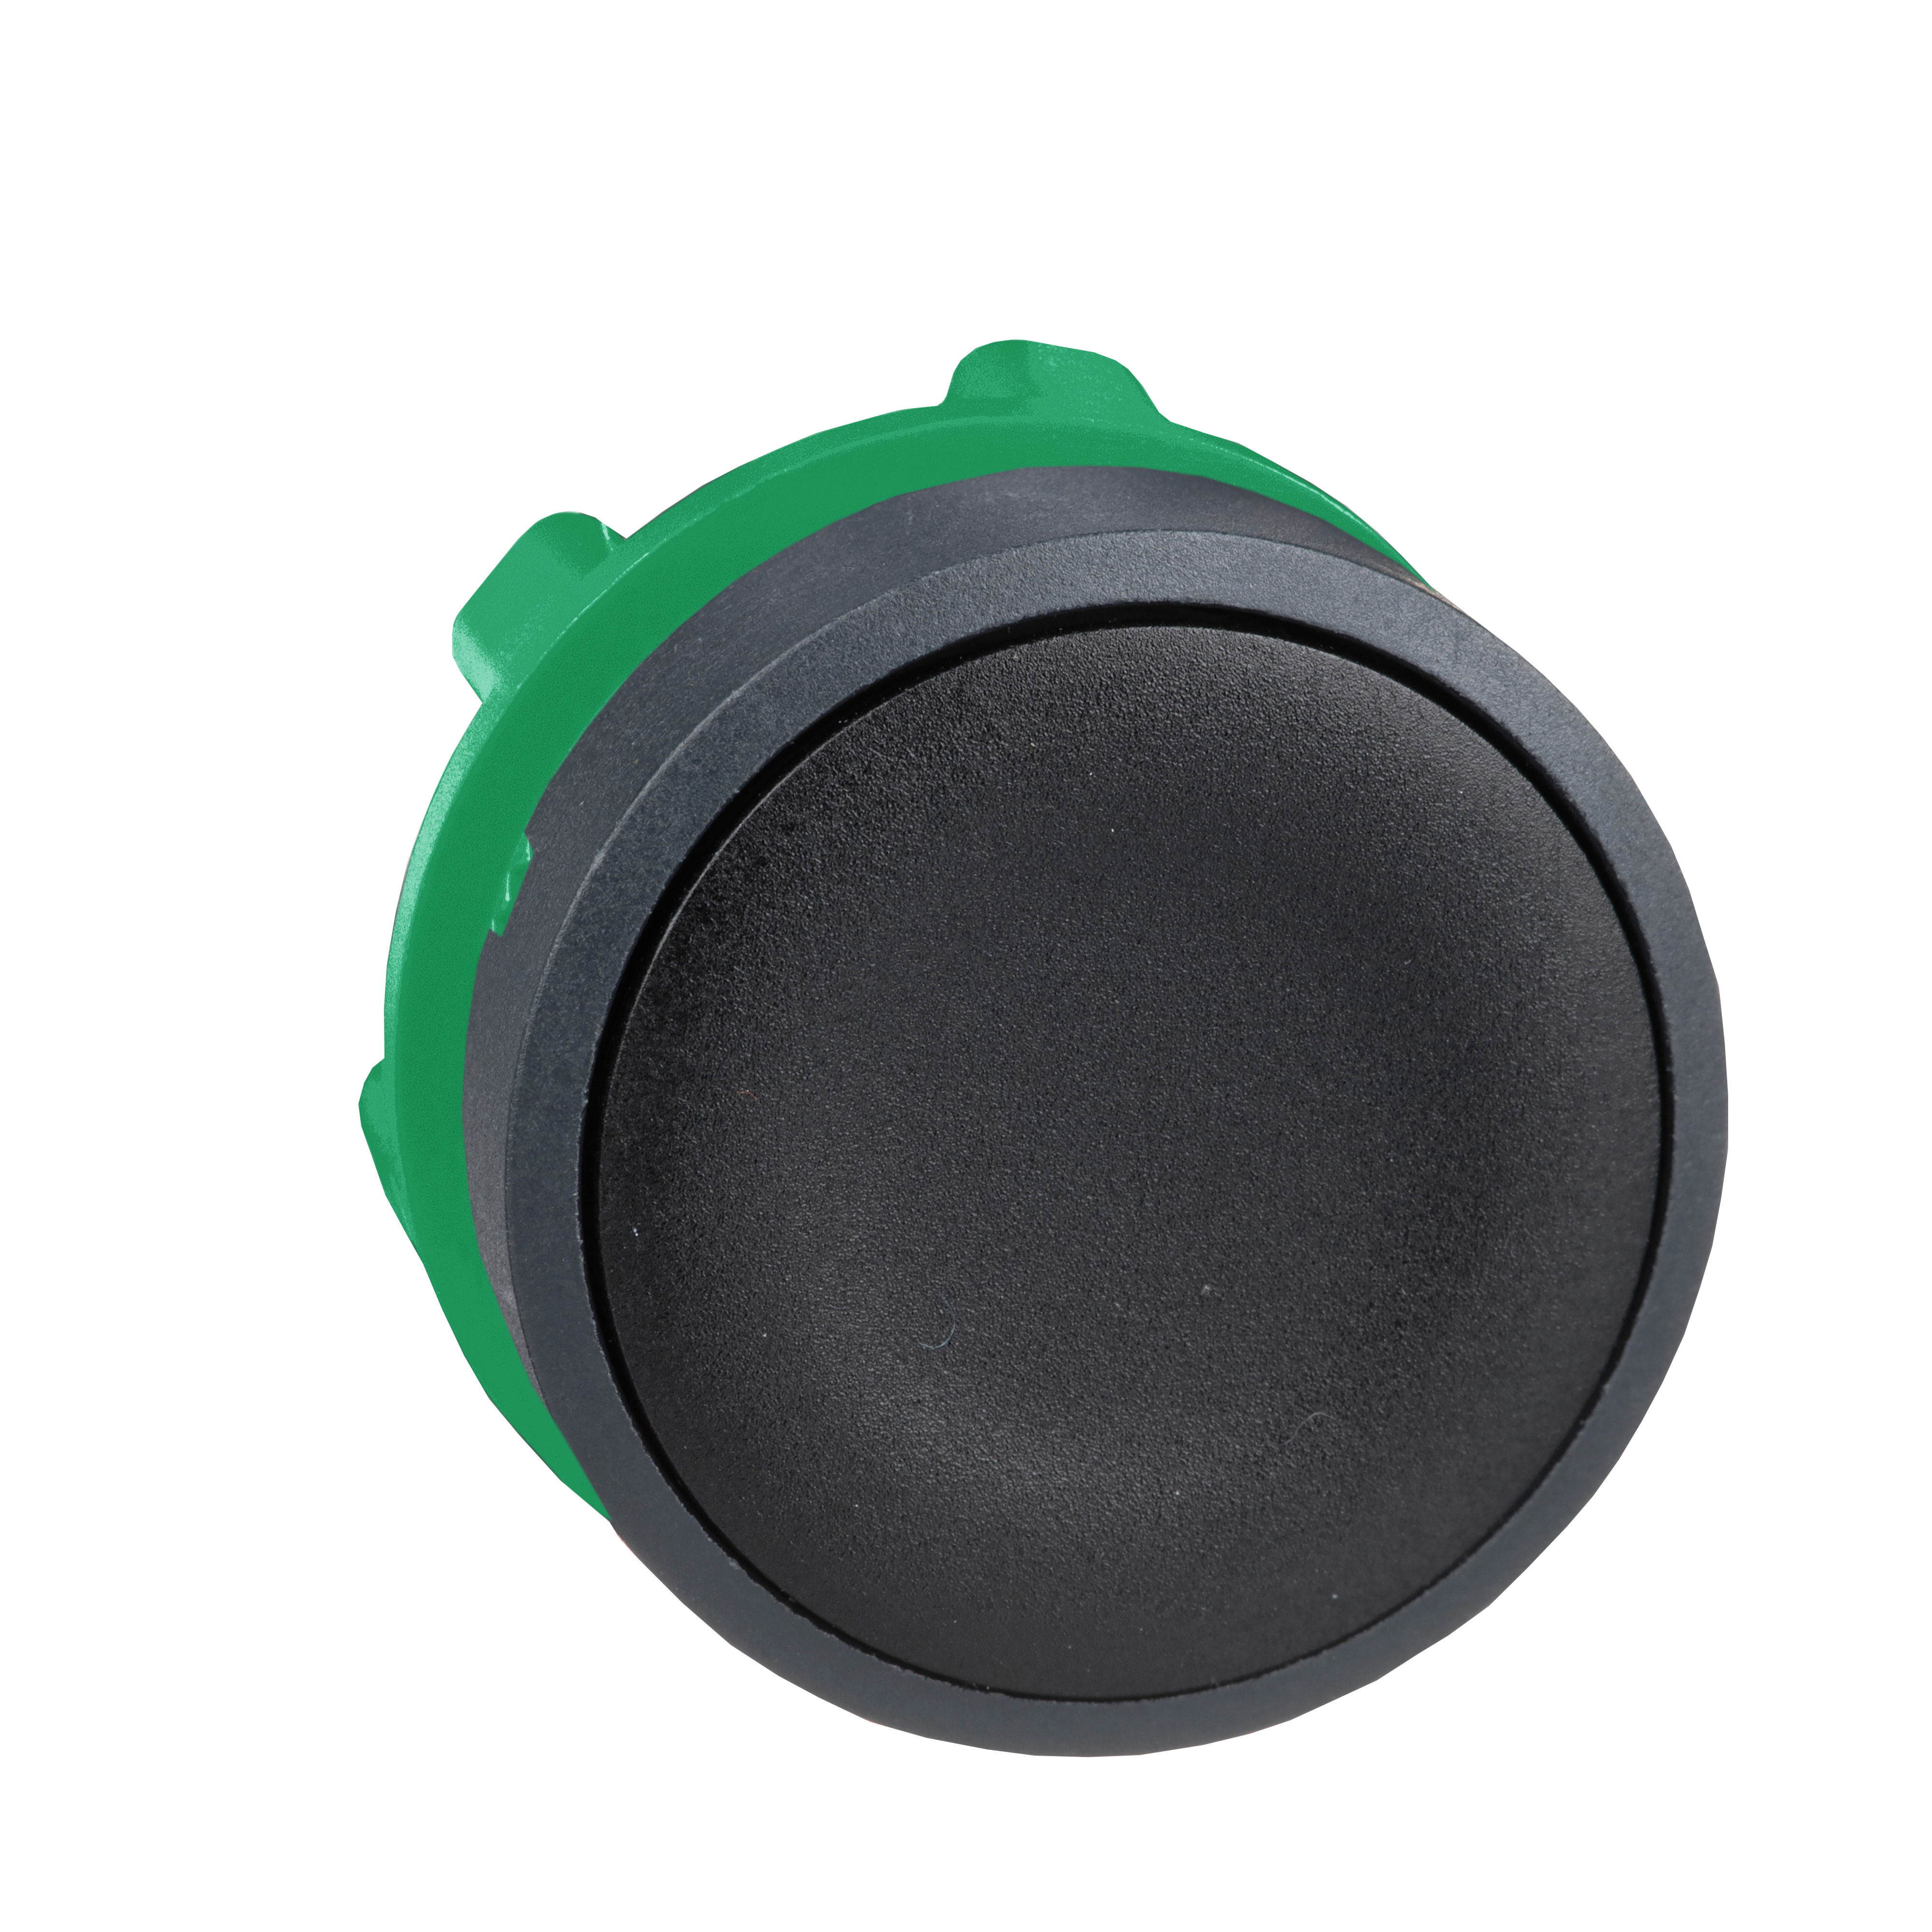 ZB5AA2 - Harmony XB5, Push button head, plastic, flush, black, Ø22, spring return, unmarked